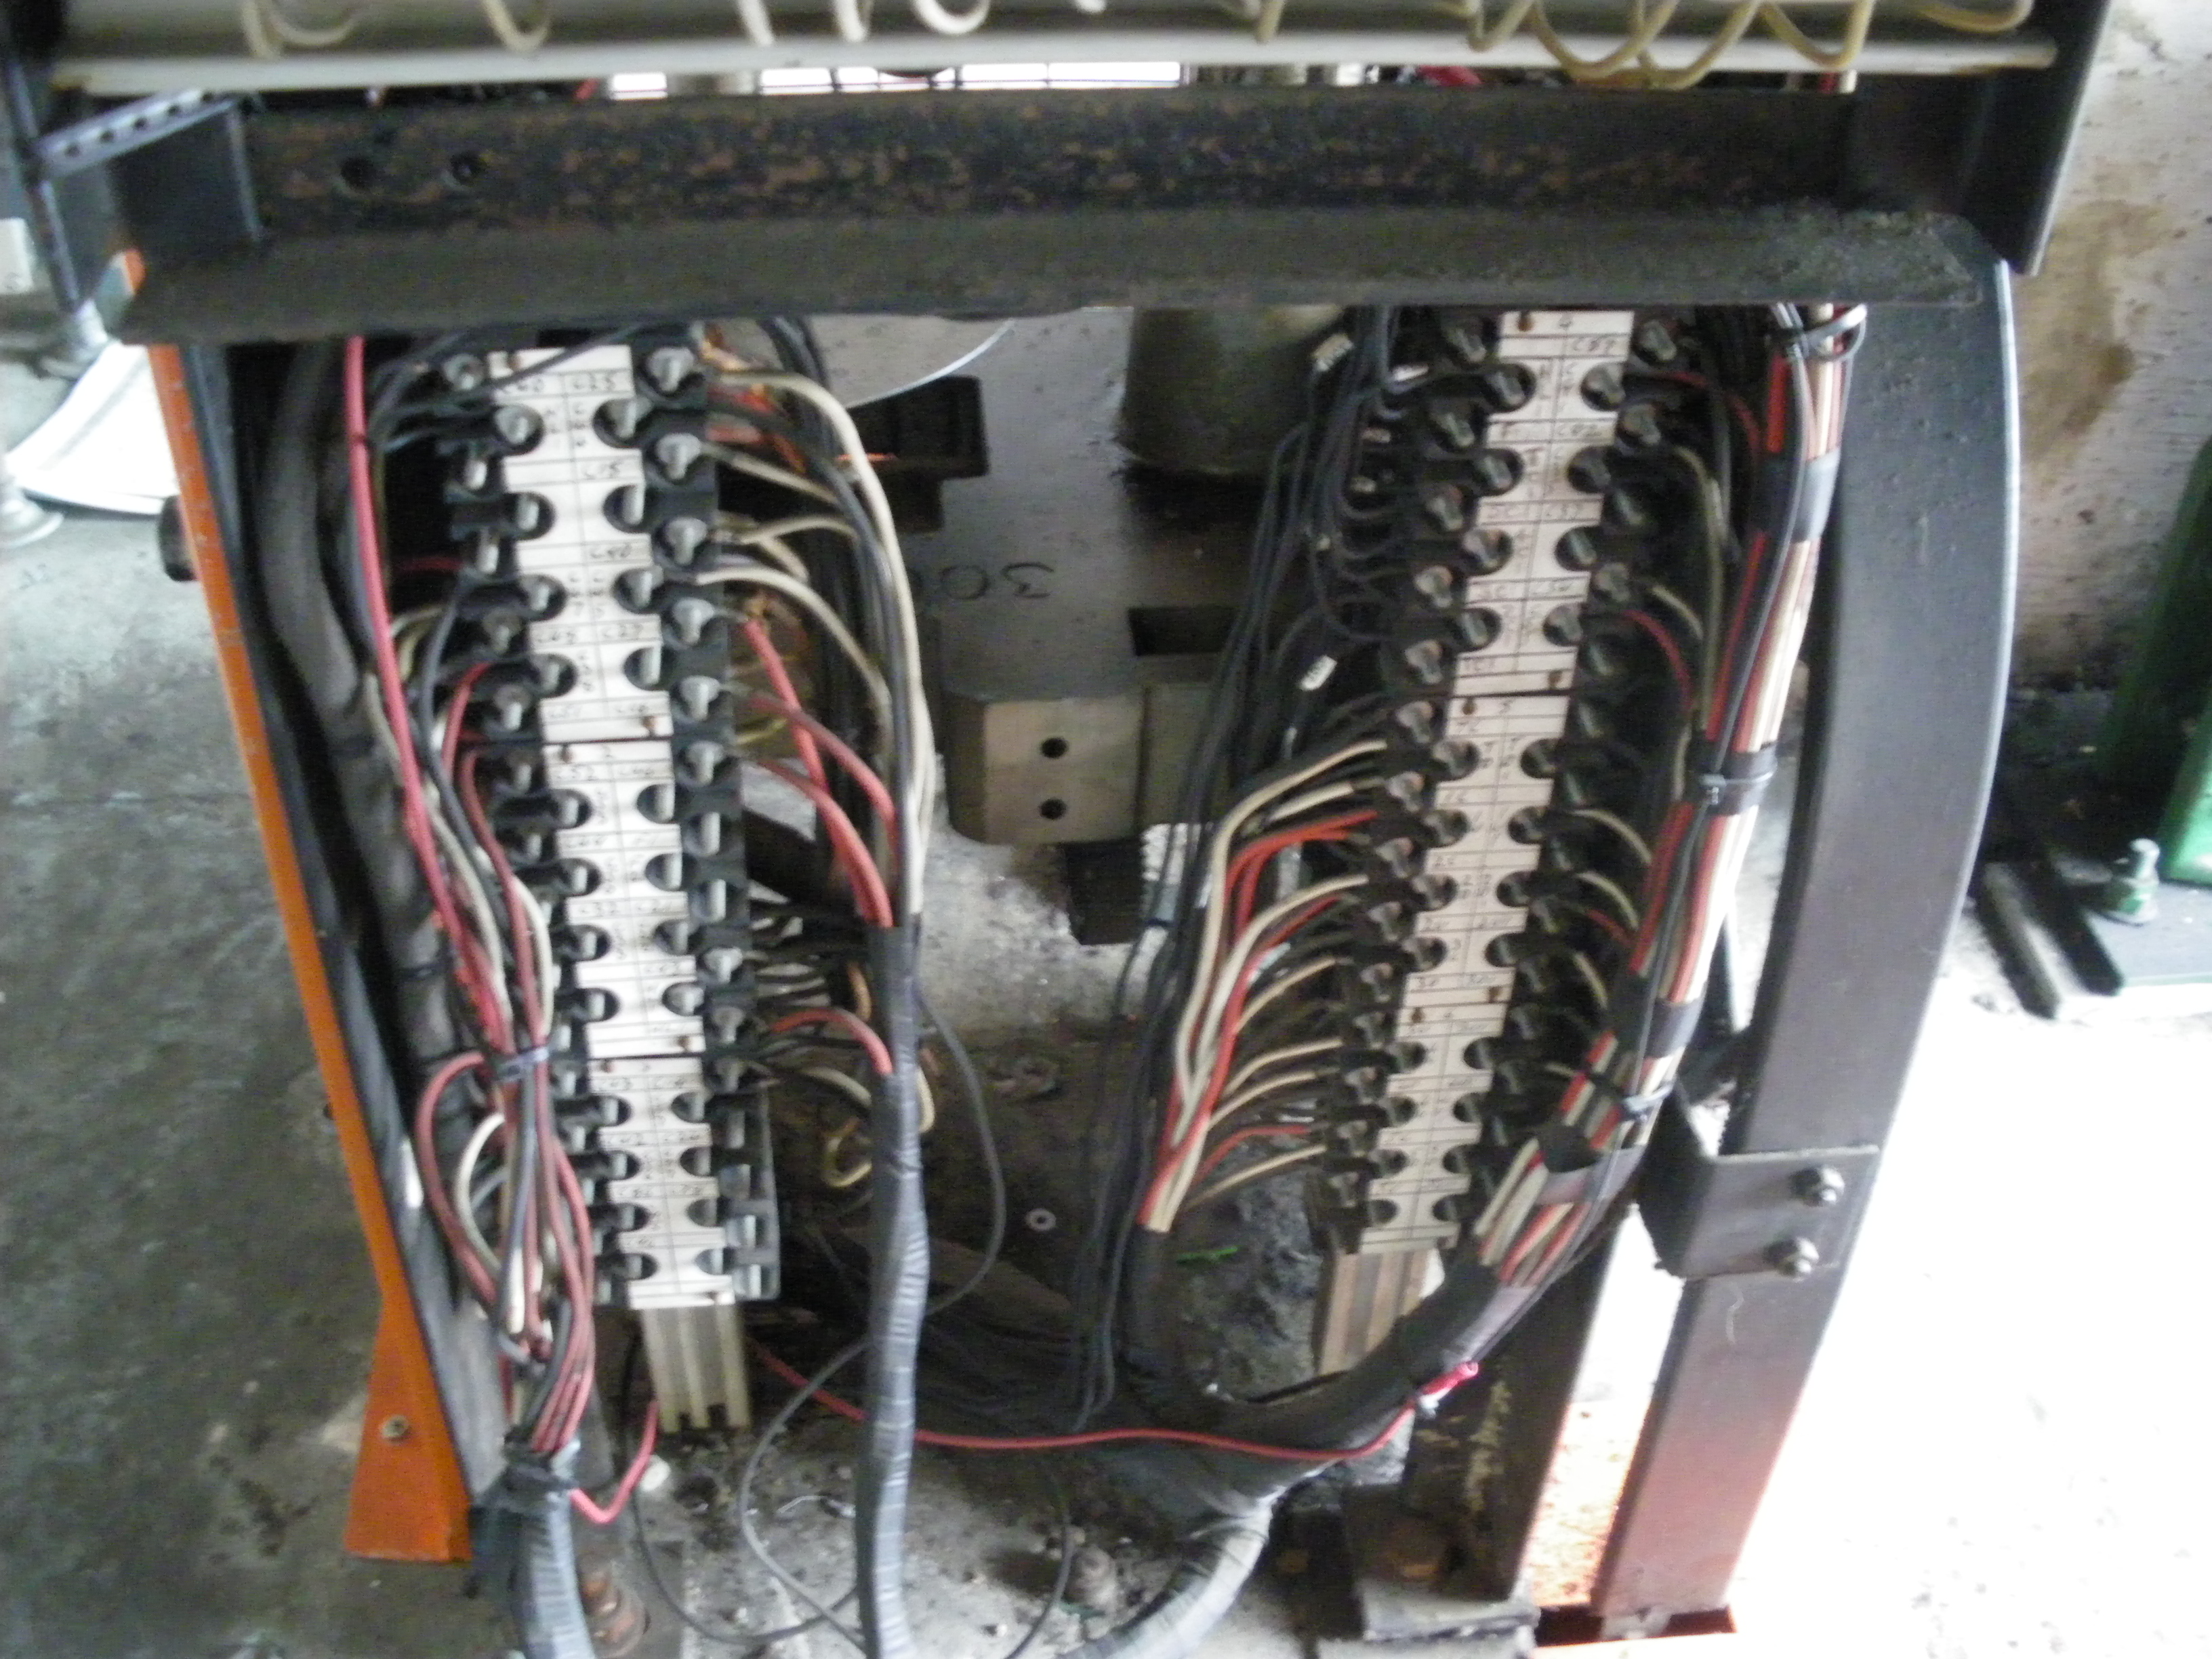 E lift - floor selector wiring terminals